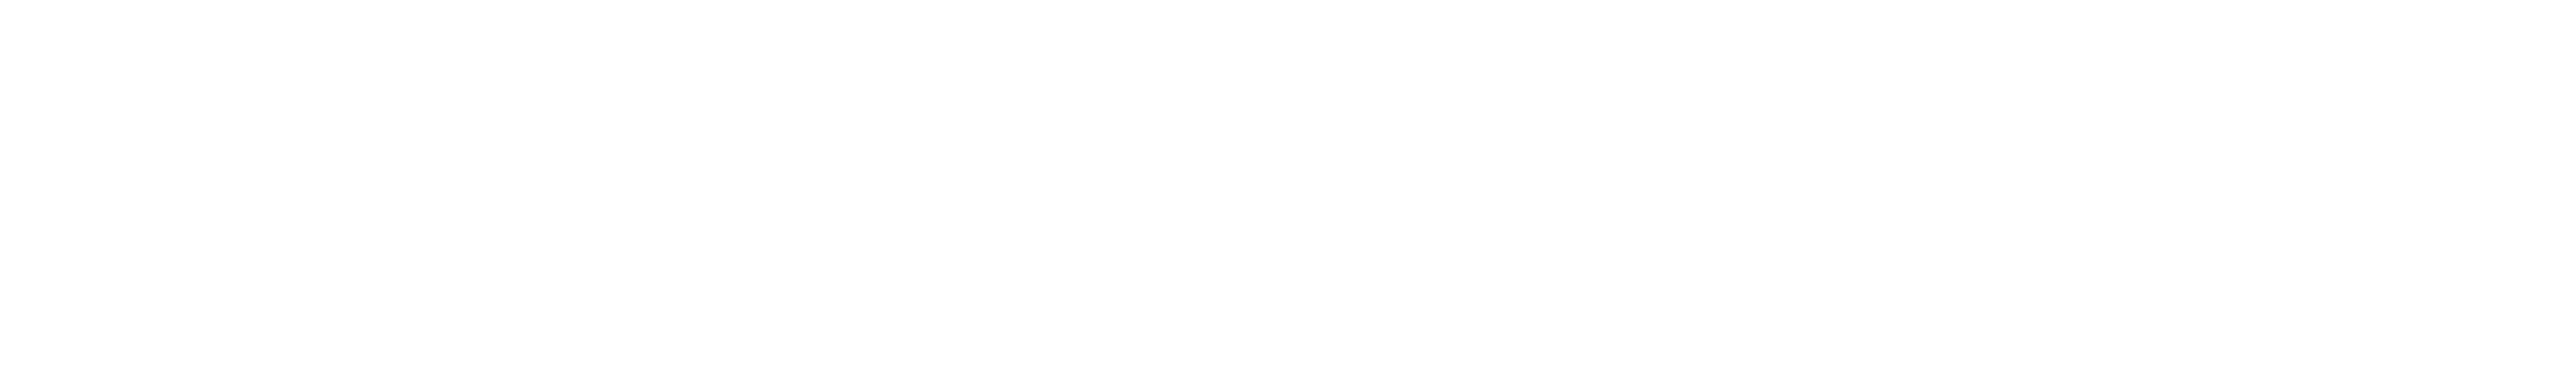 DailyJocks Help Center logo